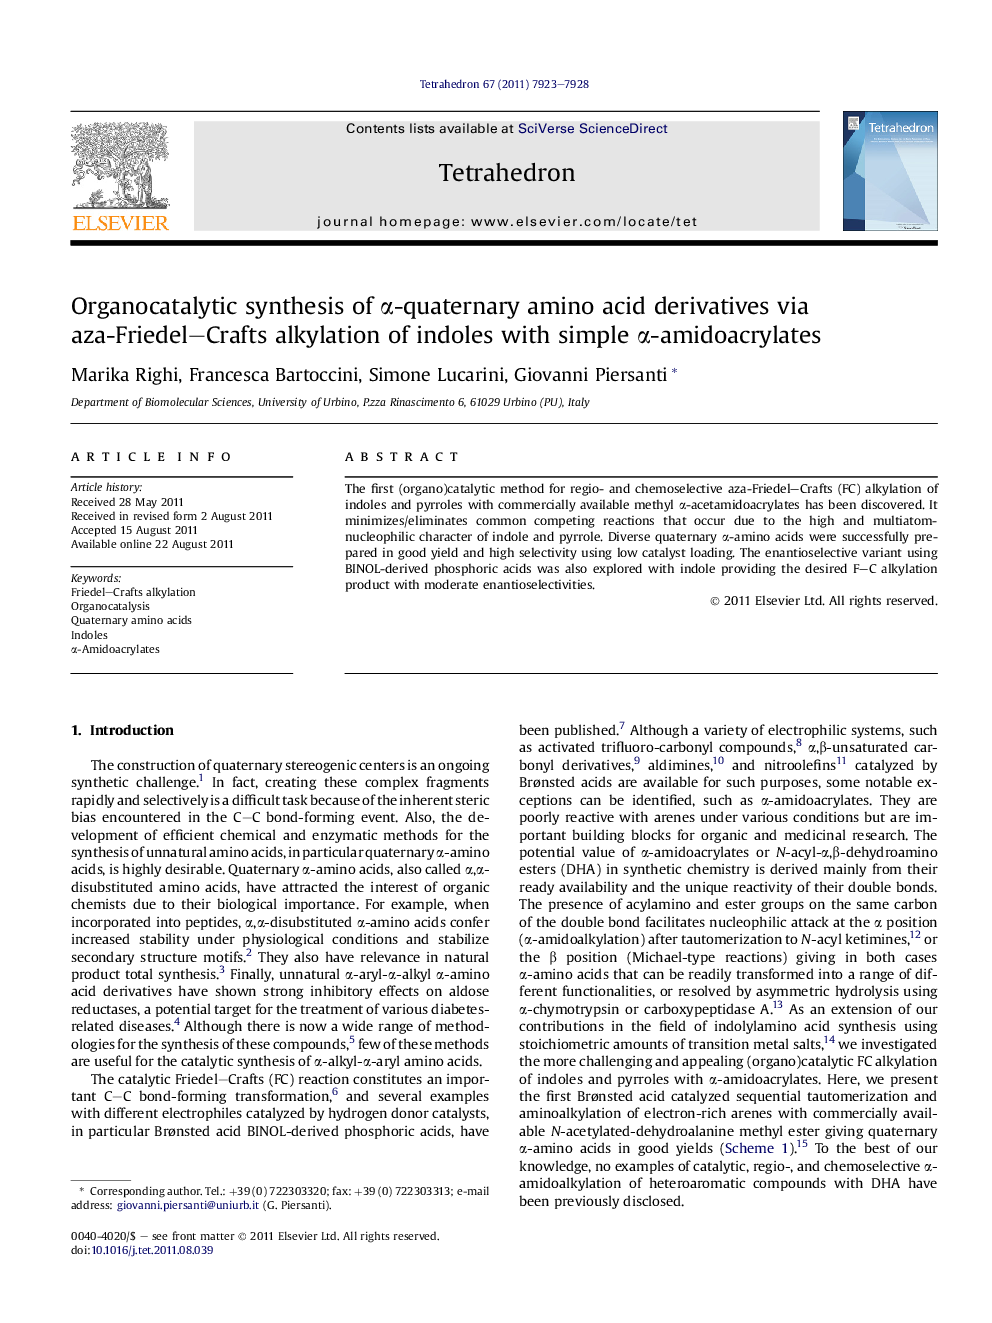 Organocatalytic synthesis of Î±-quaternary amino acid derivatives via aza-Friedel-Crafts alkylation of indoles with simple Î±-amidoacrylates